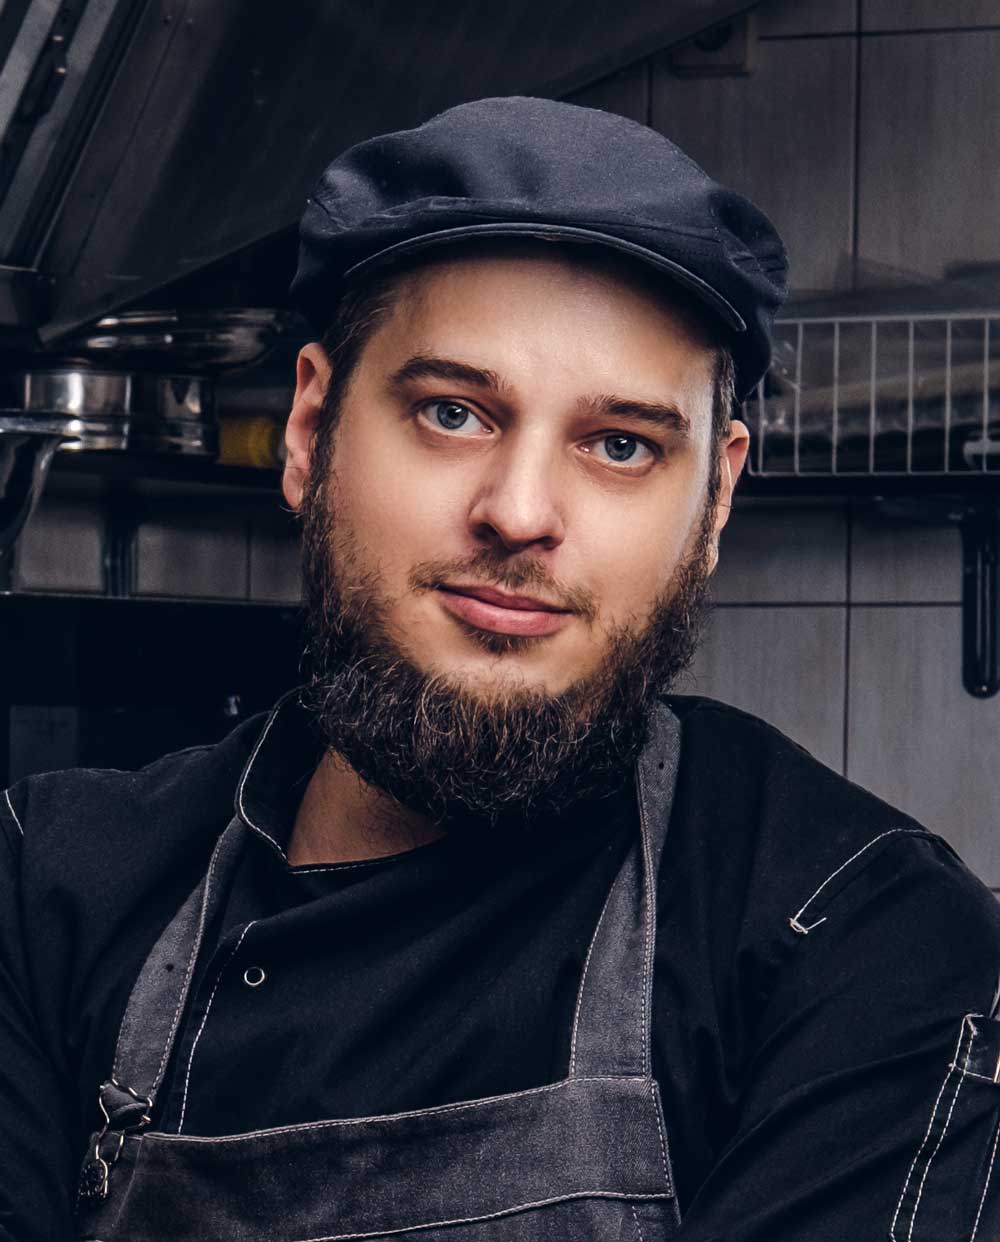 bearded-cook-in-black-uniform-and-hat-holds-knife-BMEASJV.jpg